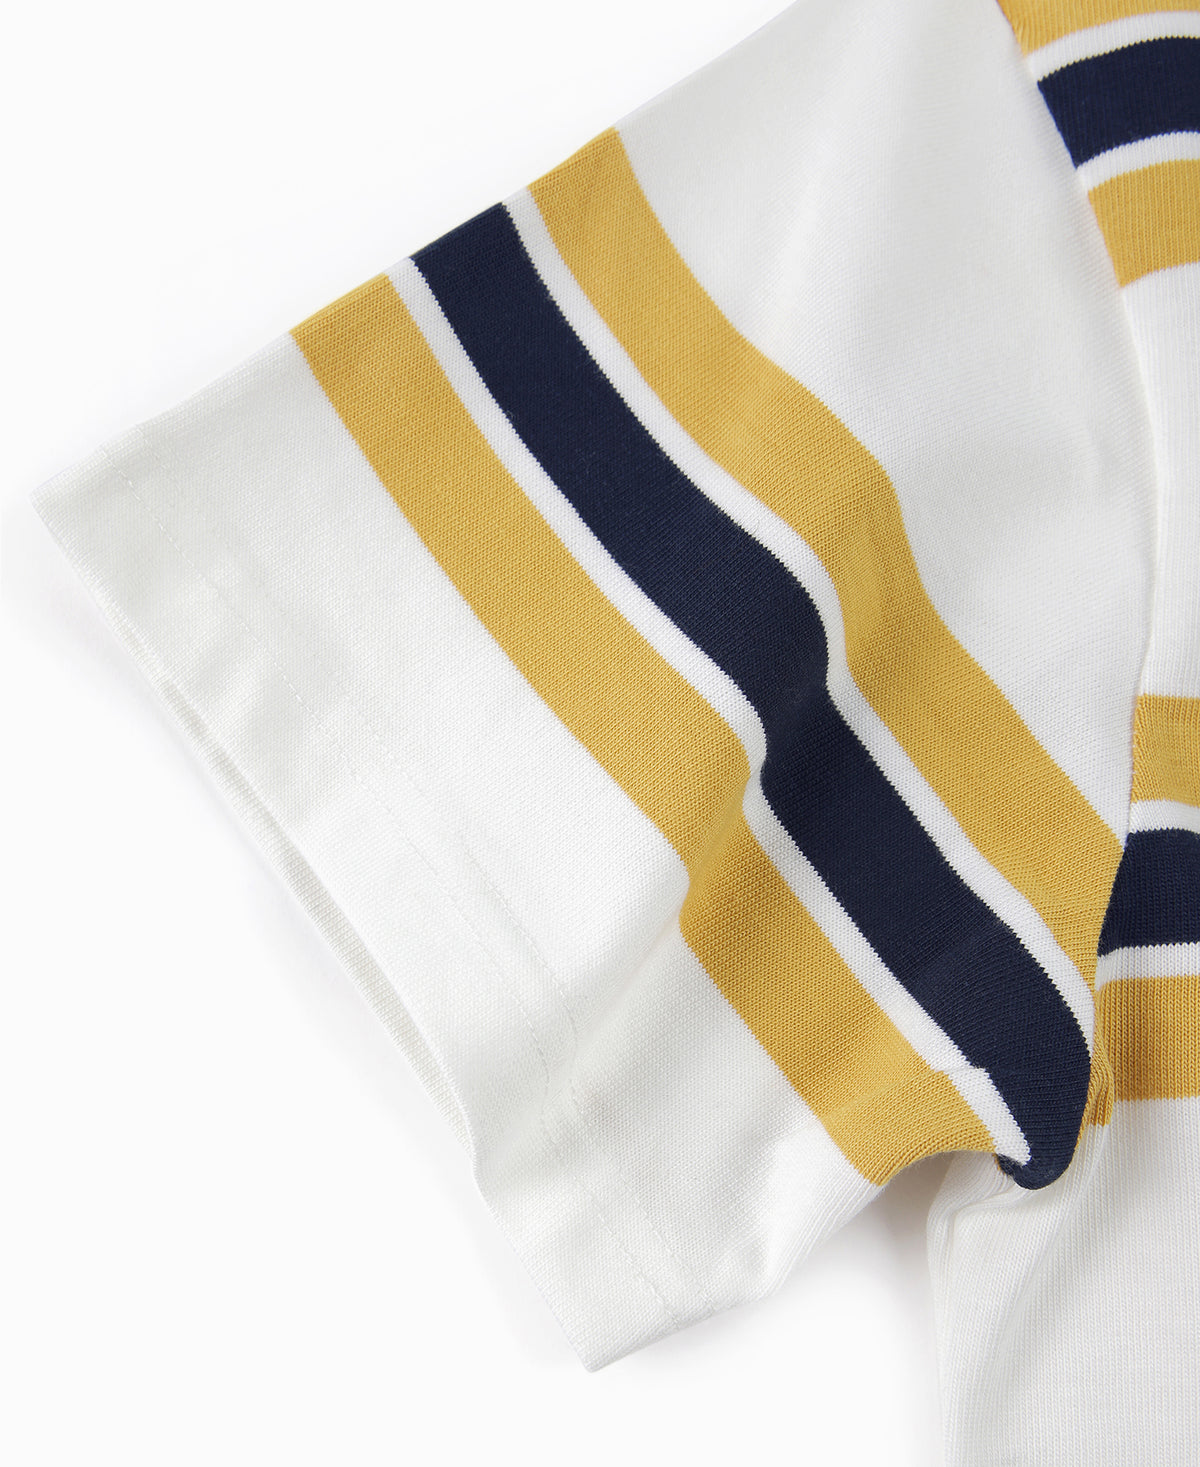 9.8 oz IVY Style Striped T-Shirt - Maize/Blue